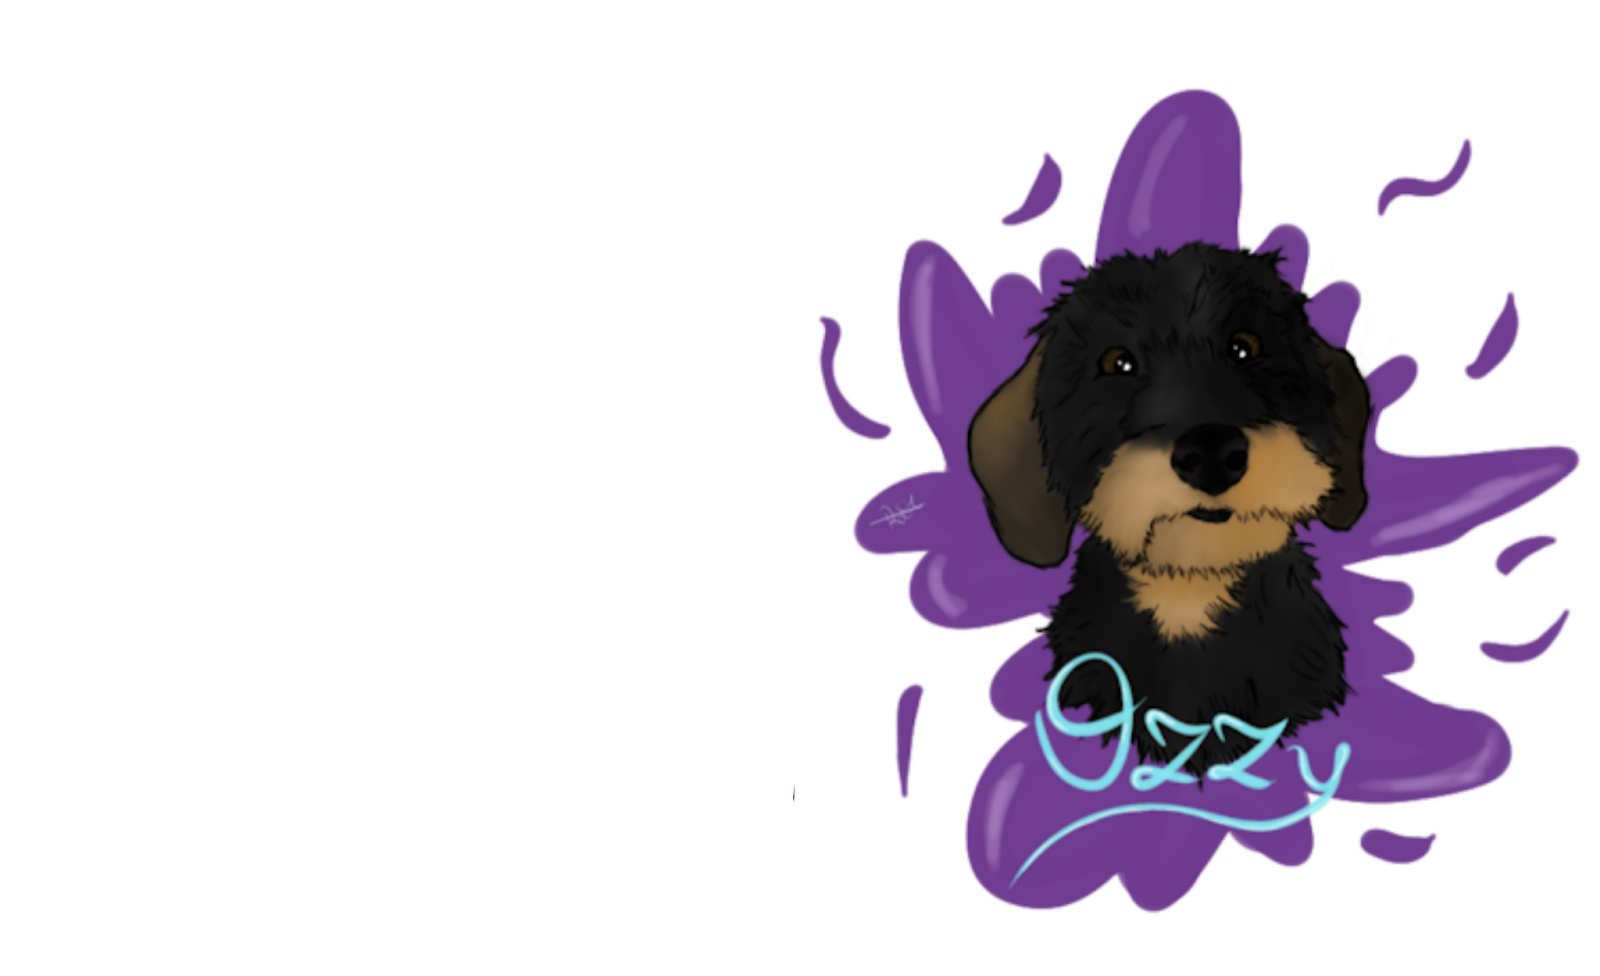 Ozzy the dachshund 